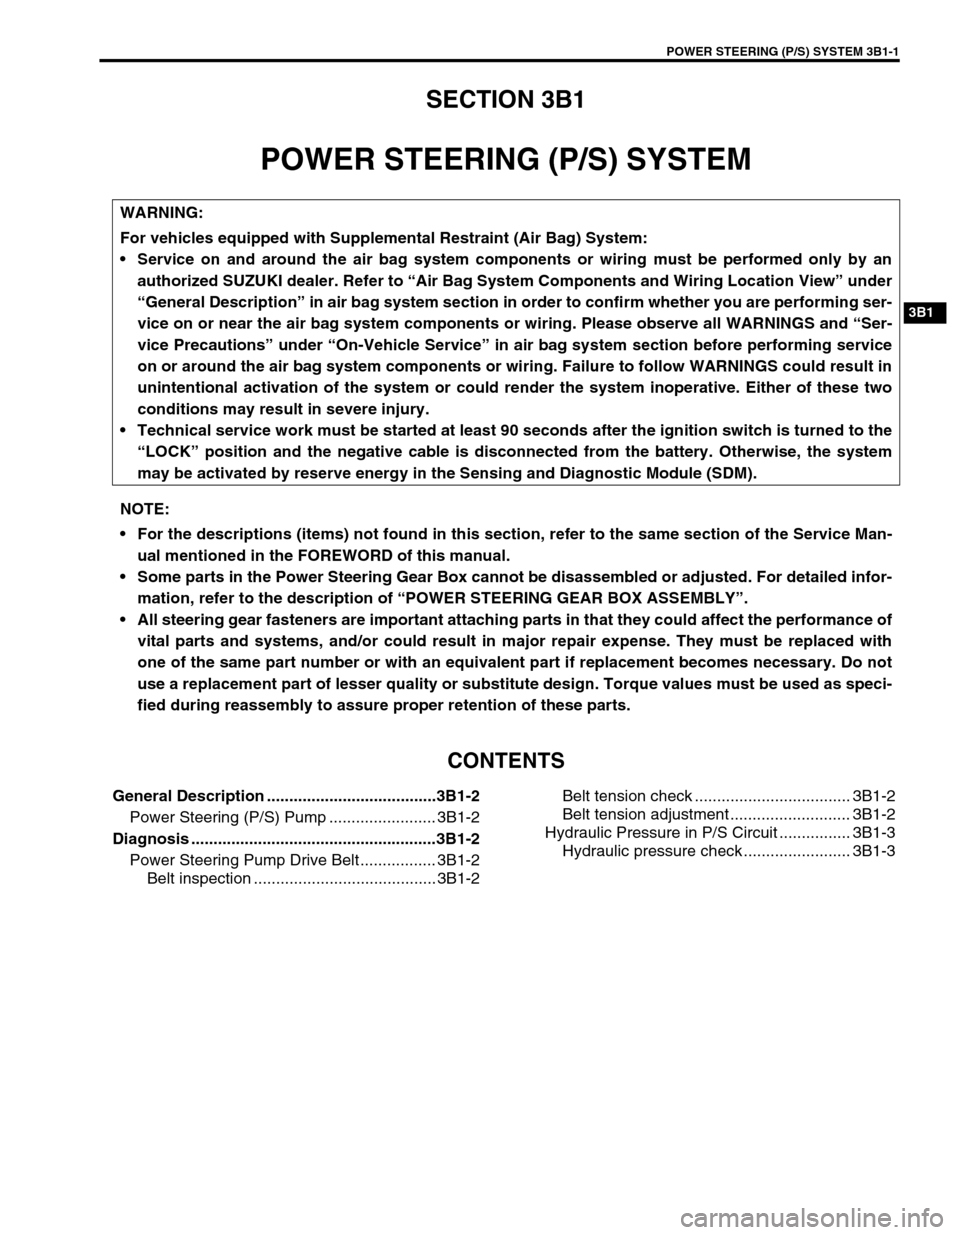 SUZUKI GRAND VITARA 2001 2.G Owners Manual POWER STEERING (P/S) SYSTEM 3B1-1
3B1
SECTION 3B1
POWER STEERING (P/S) SYSTEM
CONTENTS
General Description ......................................3B1-2
Power Steering (P/S) Pump .......................